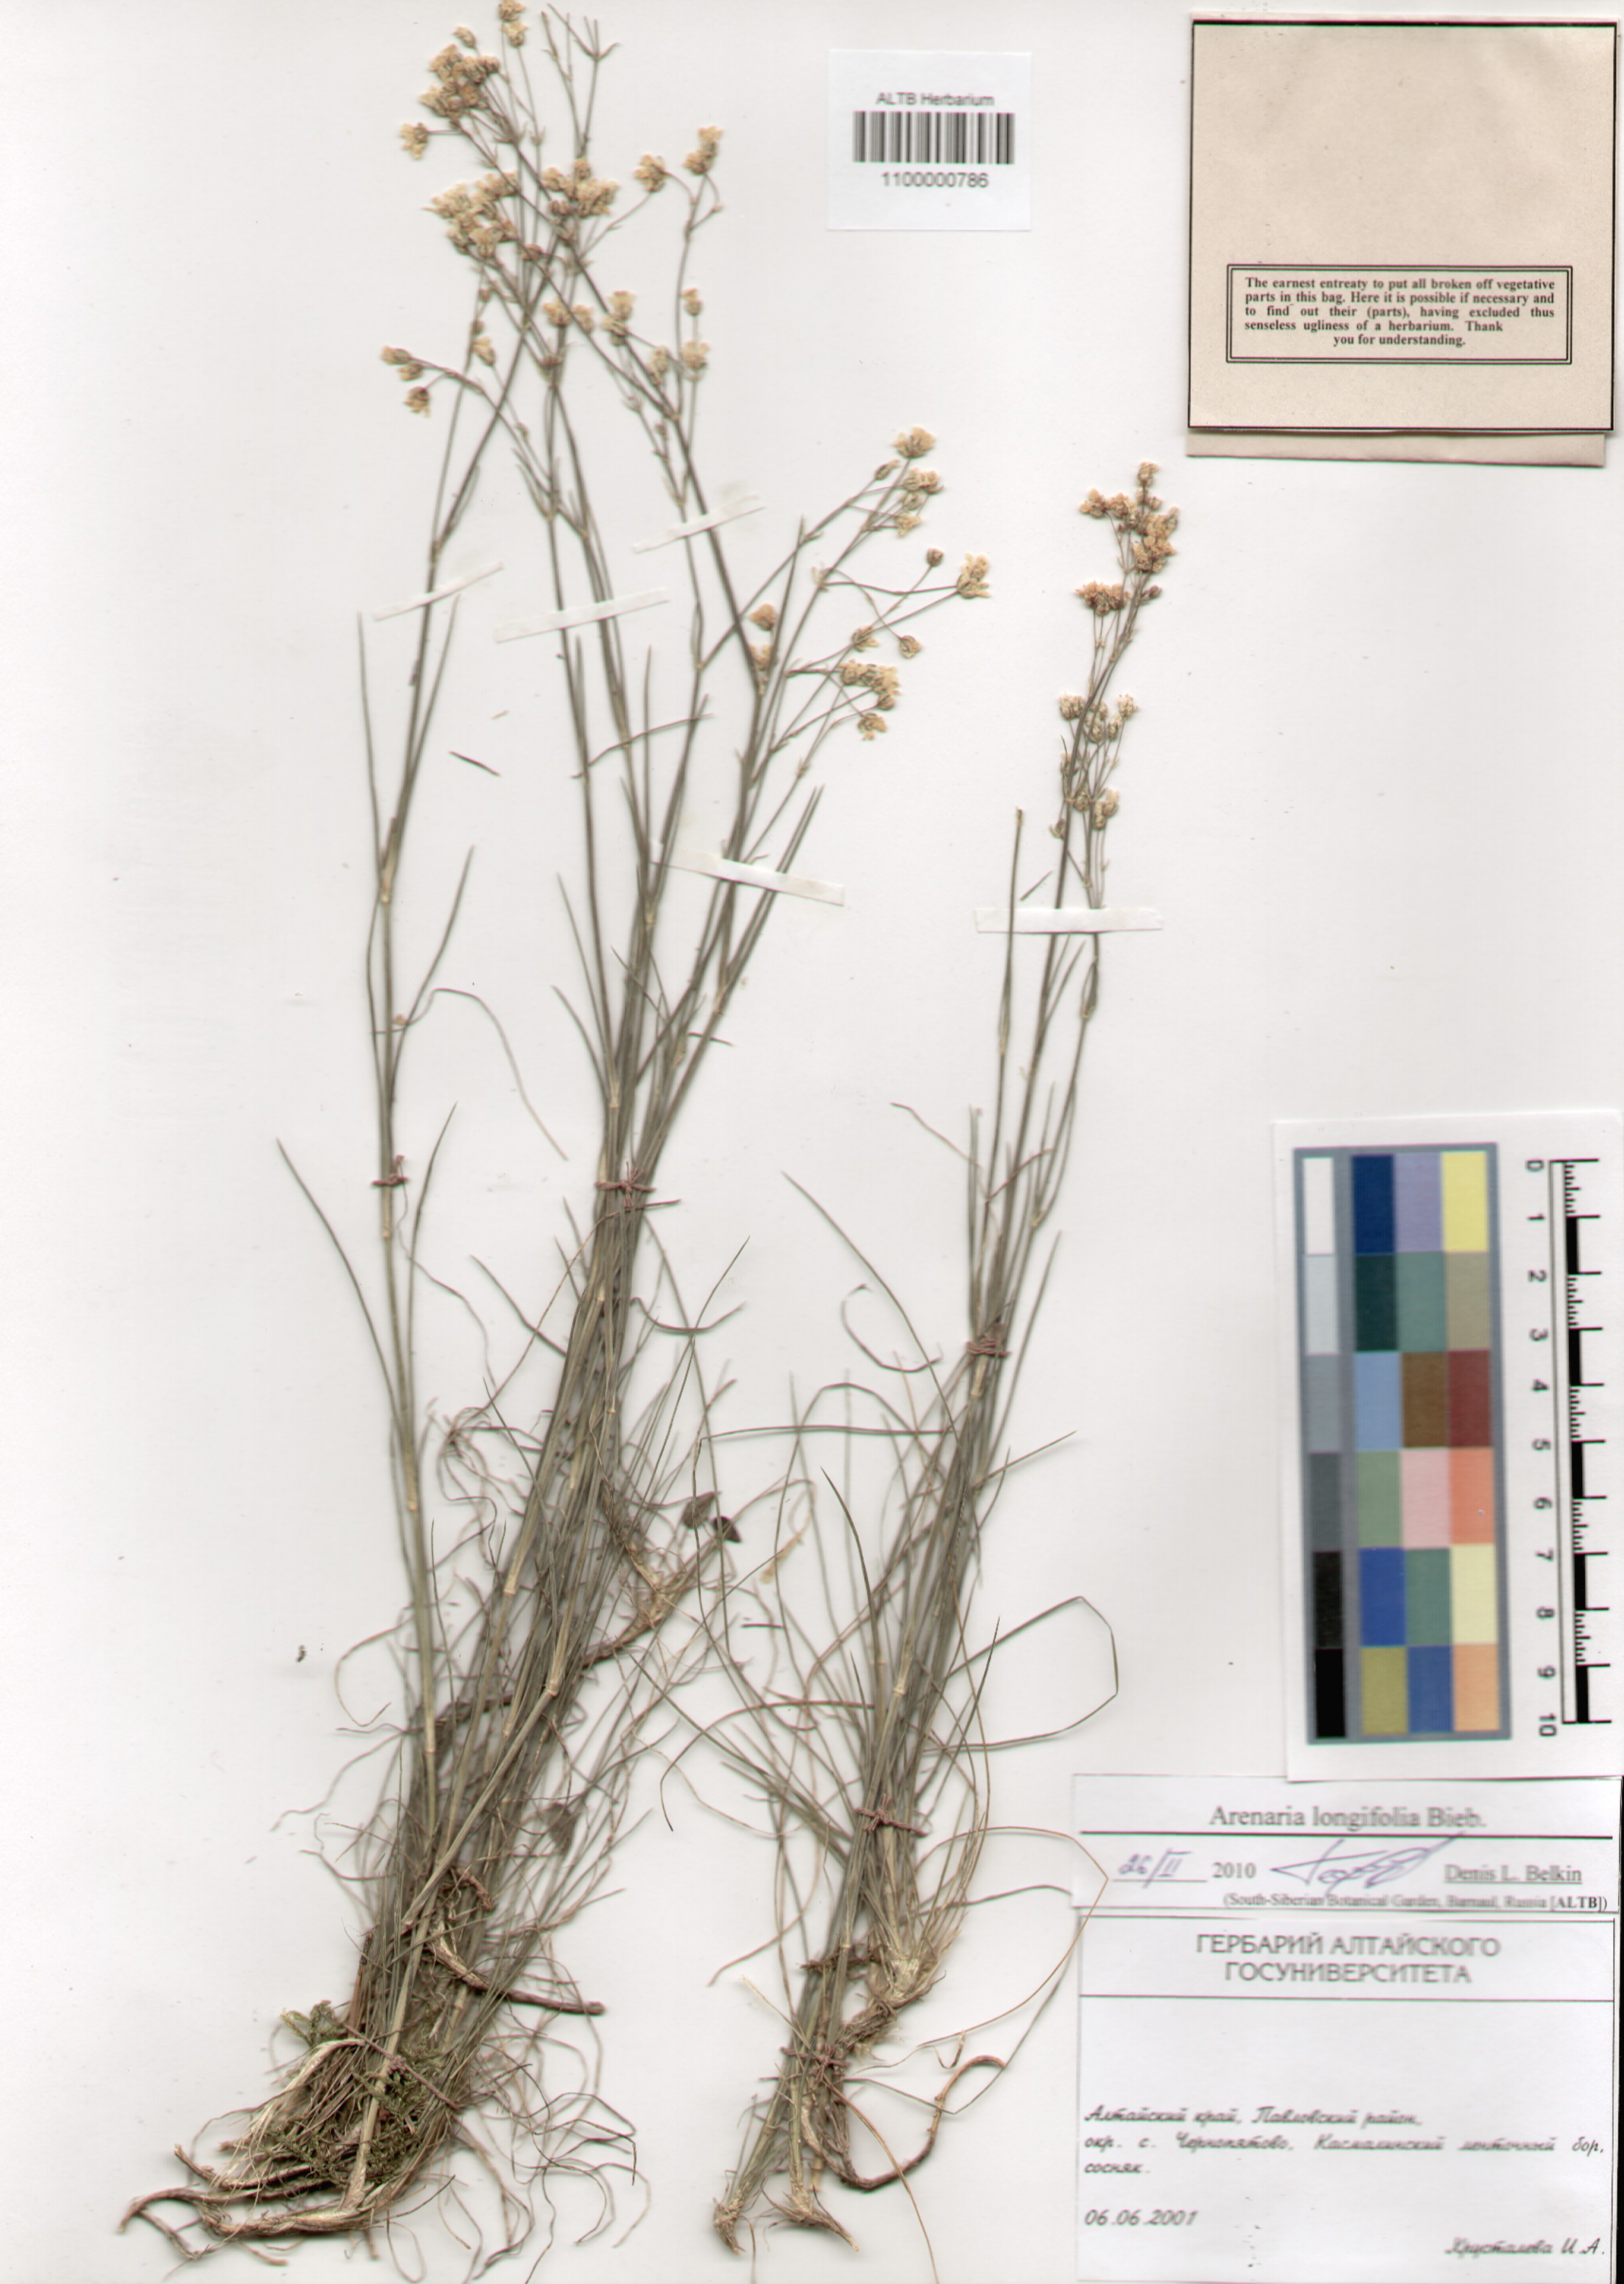 Caryophyllaceae,Arenaria longifolia Bieb.